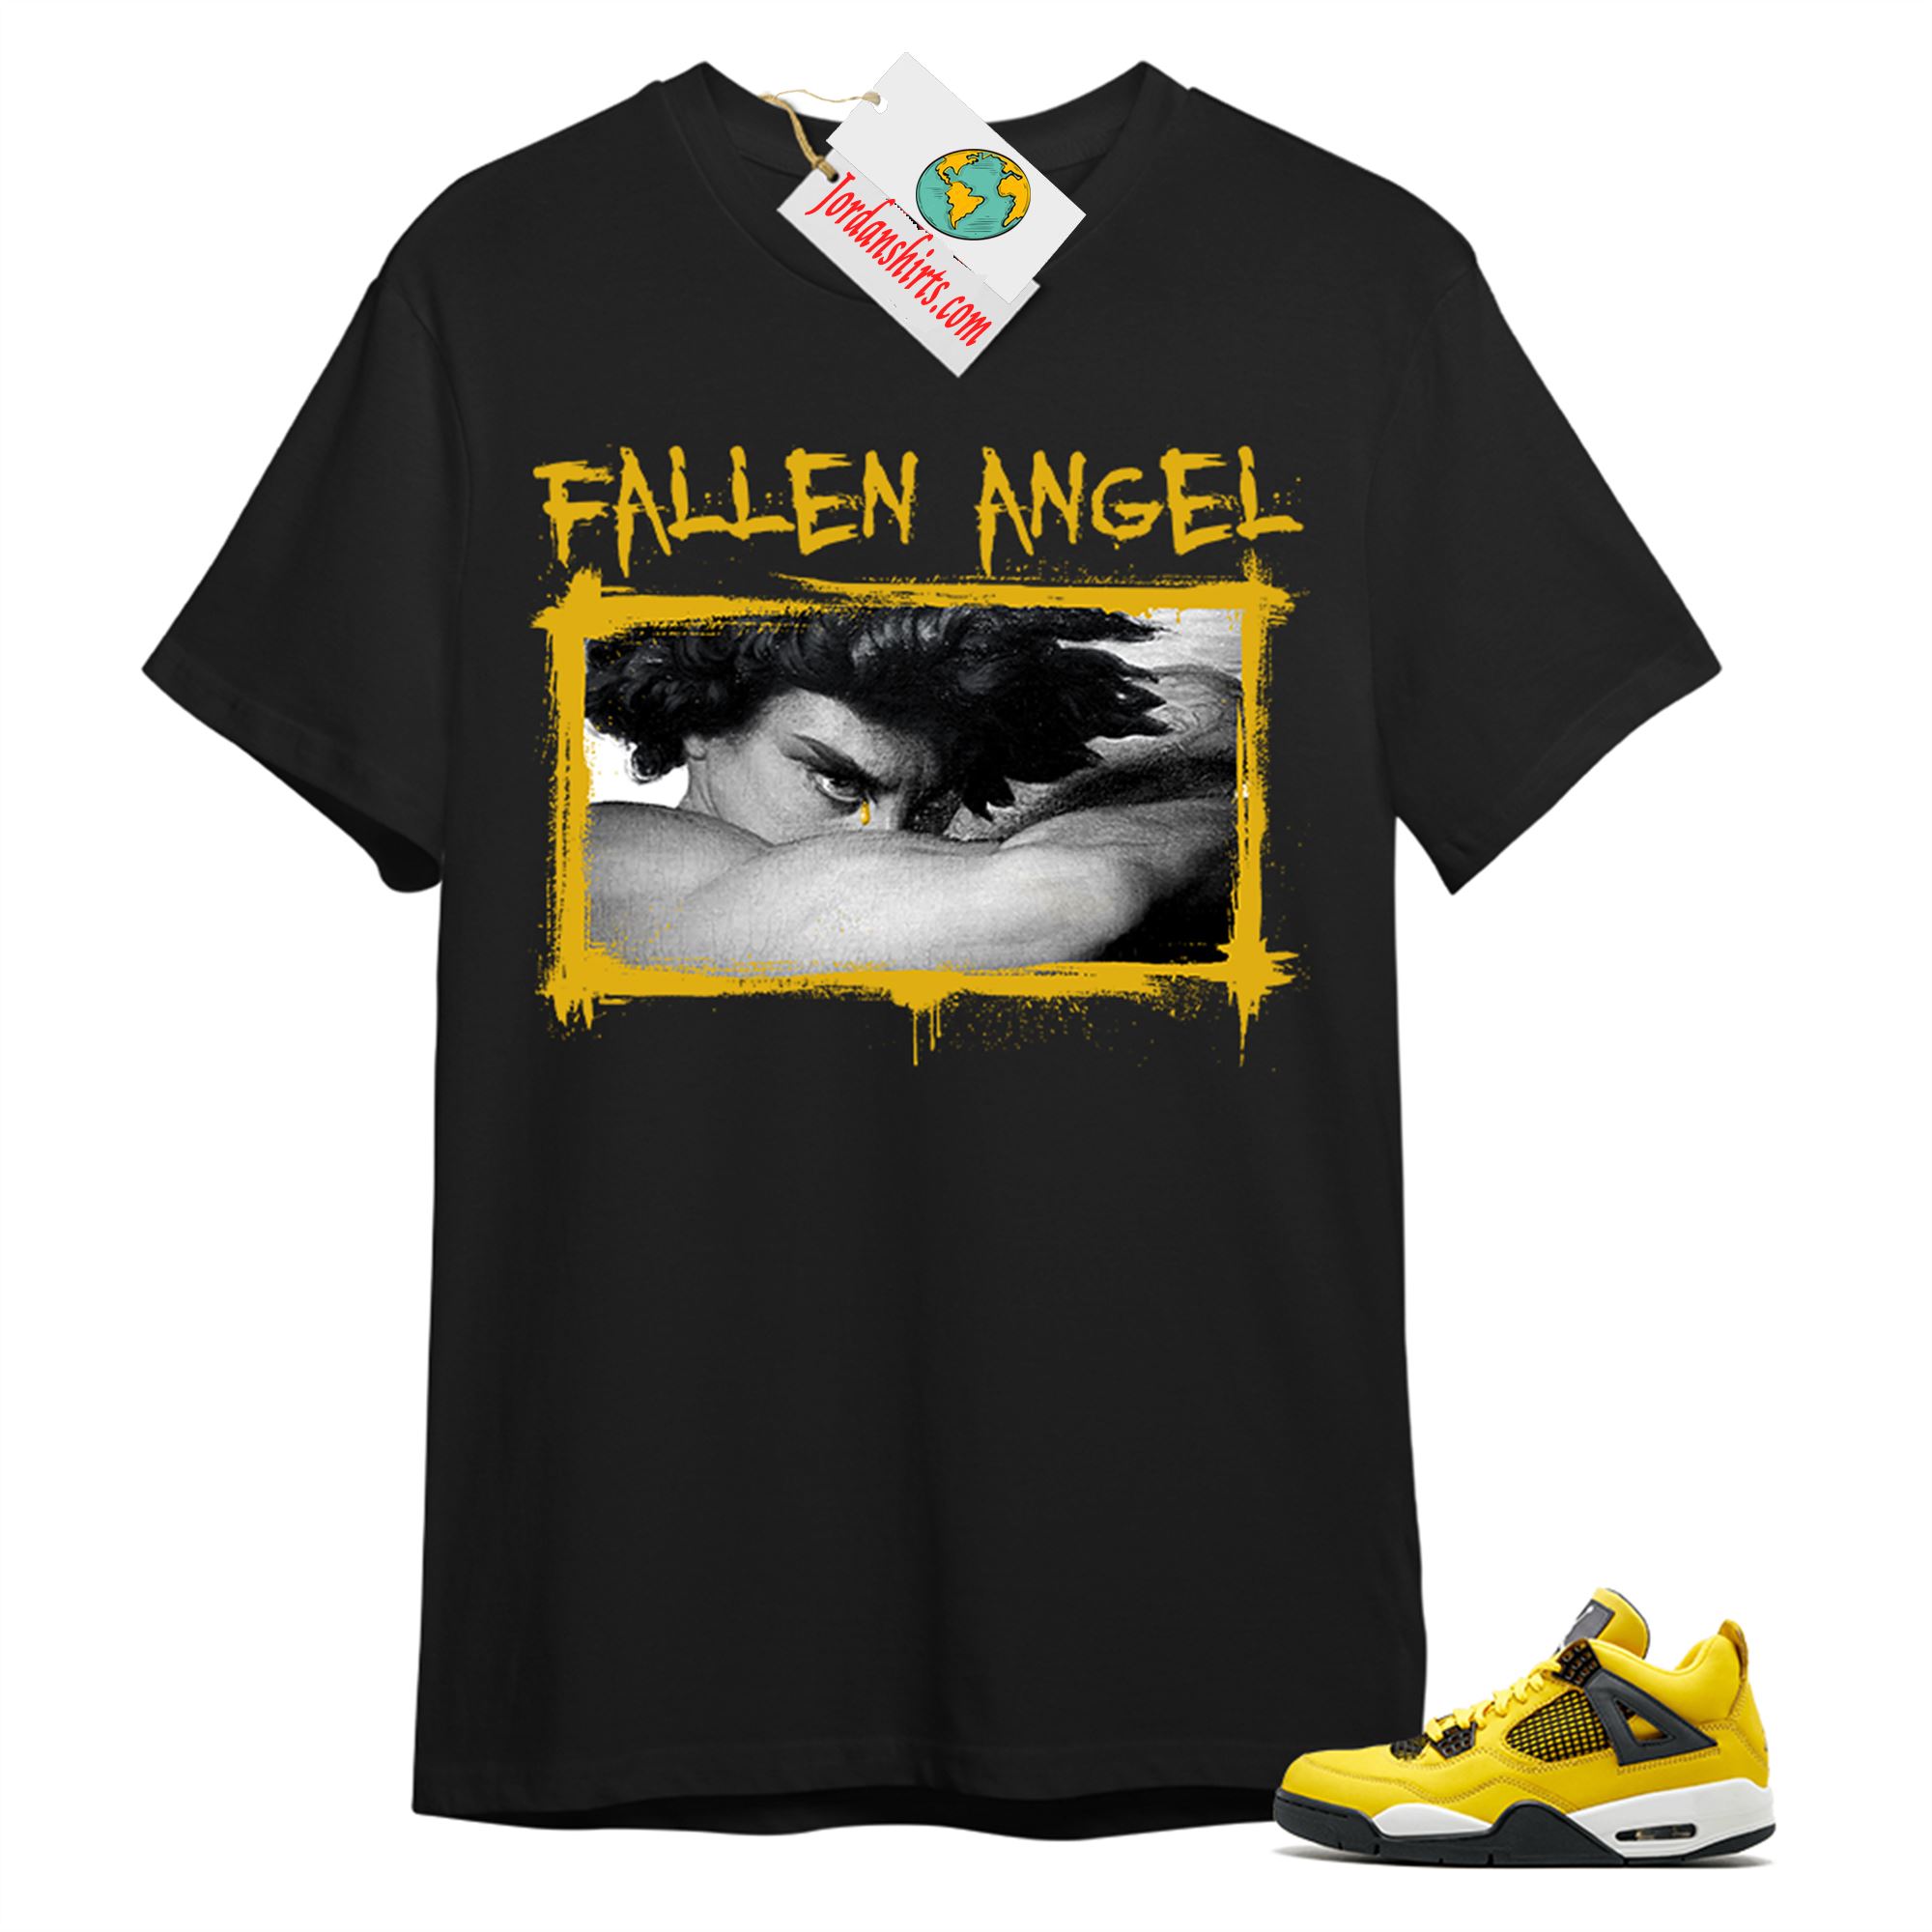 Jordan 4 Shirt, Fallen Angel Black T-shirt Air Jordan 4 Tour Yellow Lightning 4s Plus Size Up To 5xl